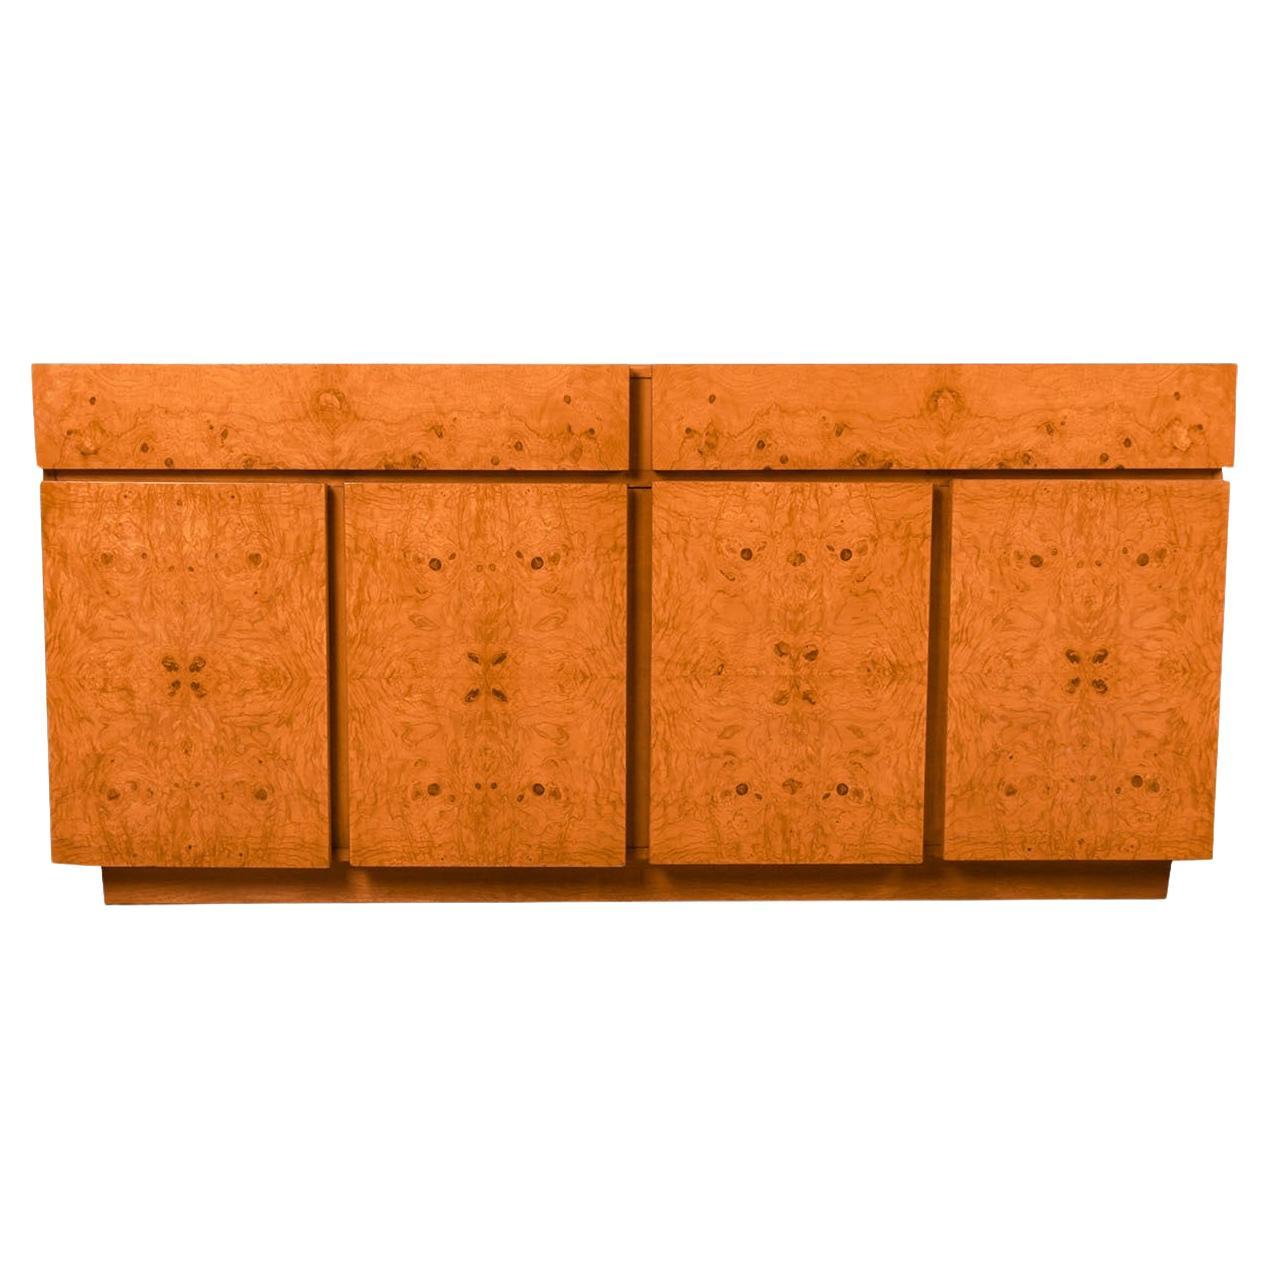 Mid-Century Milo Baughman Style Burl Wood Sideboard Credenza Bar Cabinet